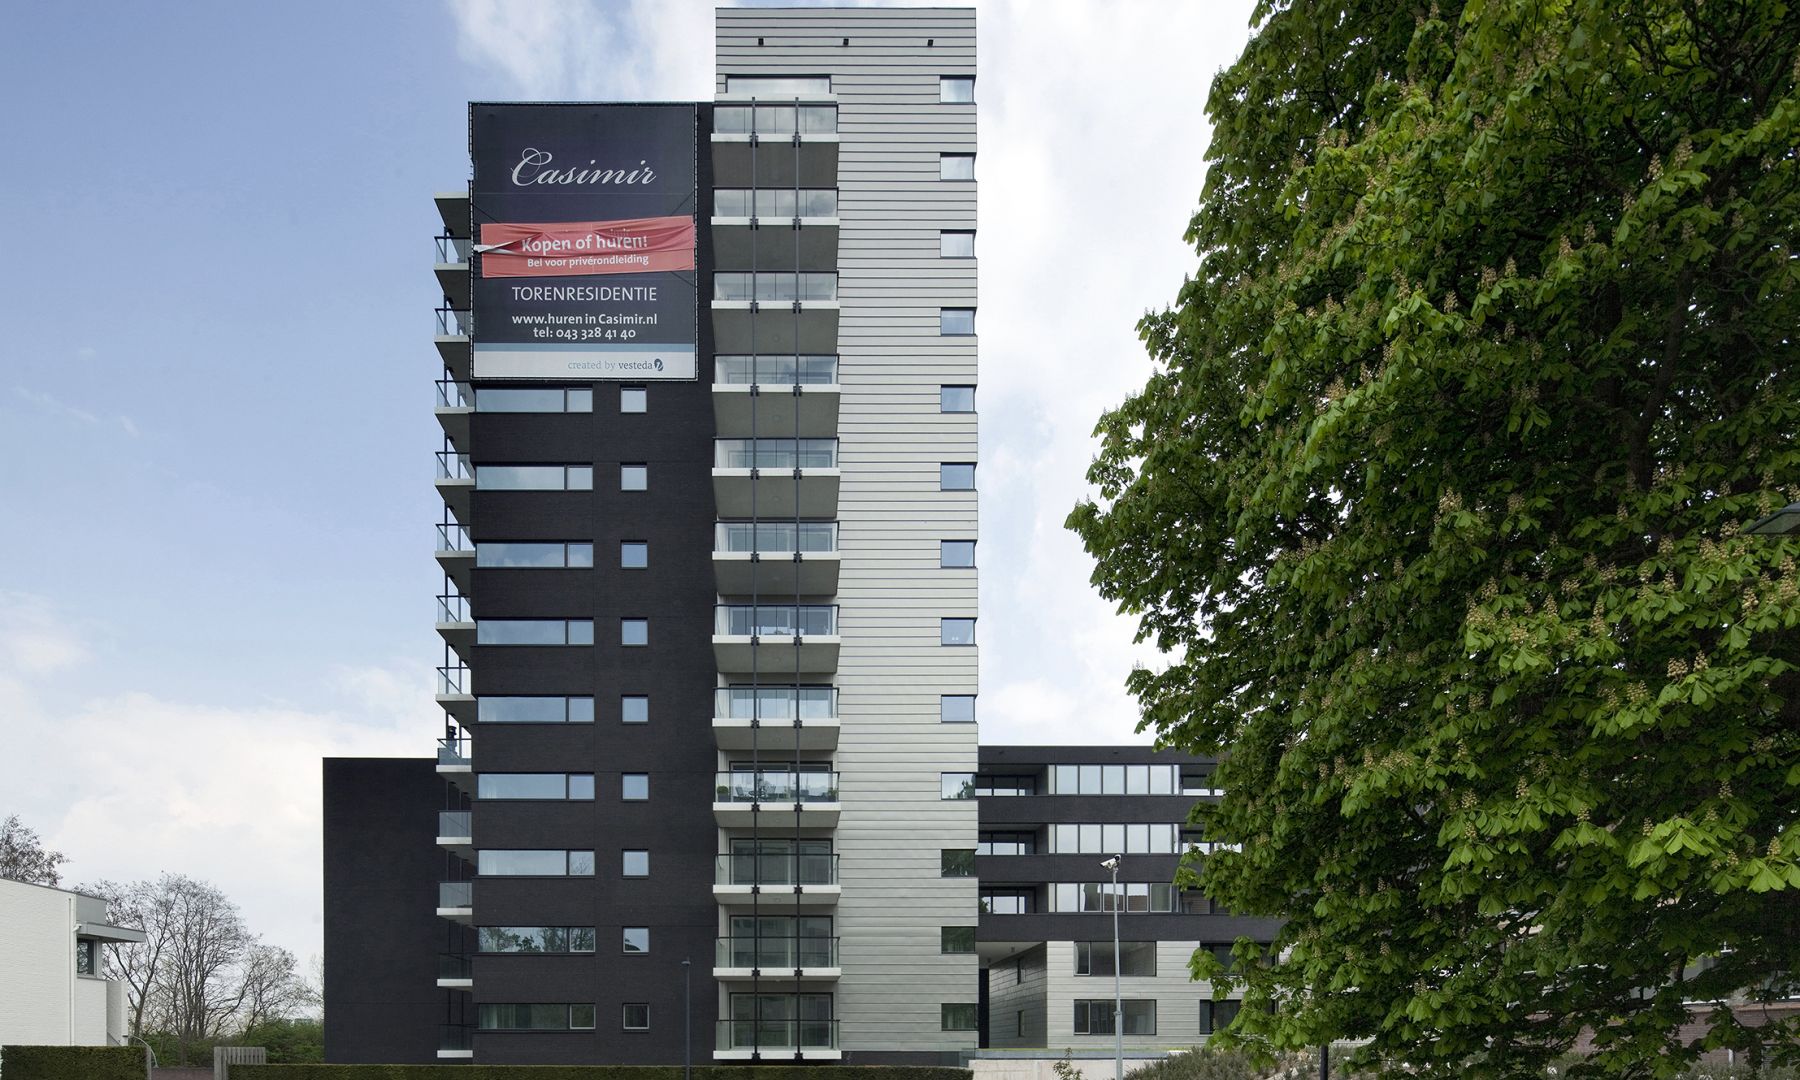 Apartment block Casimir - Roermond, Engelman Architecten